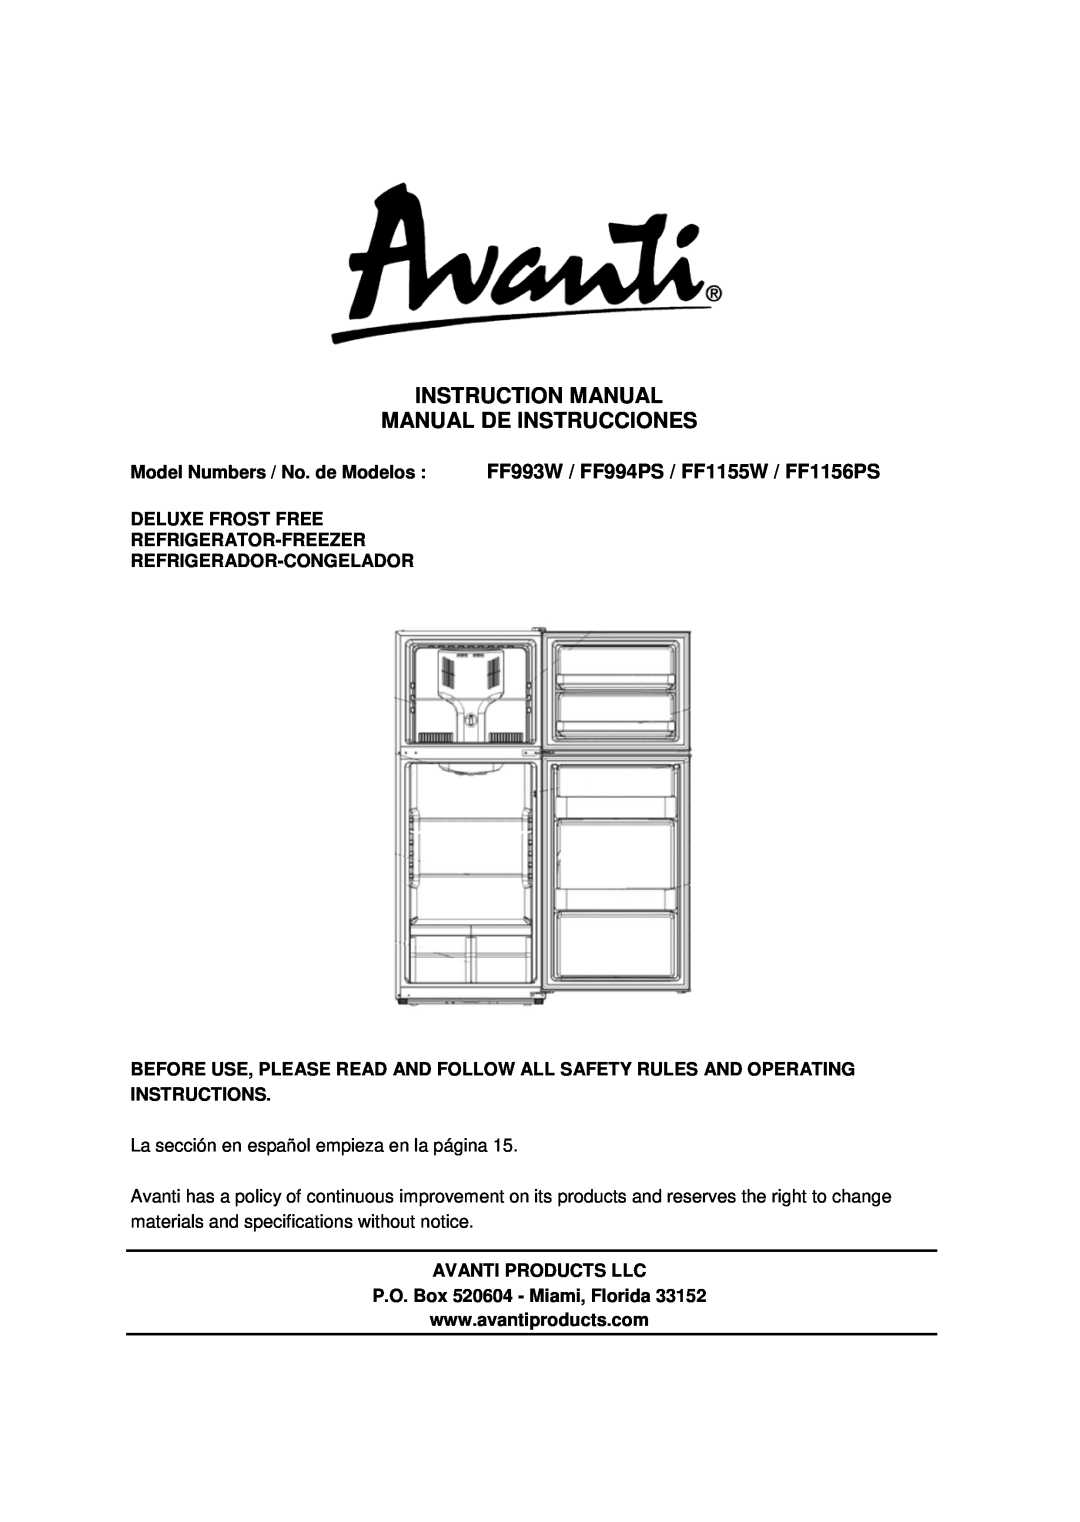 Avanti FF1155W instruction manual Deluxe Frost Free Refrigerator-Freezer, Refrigerador-Congelador, Avanti Products Llc 